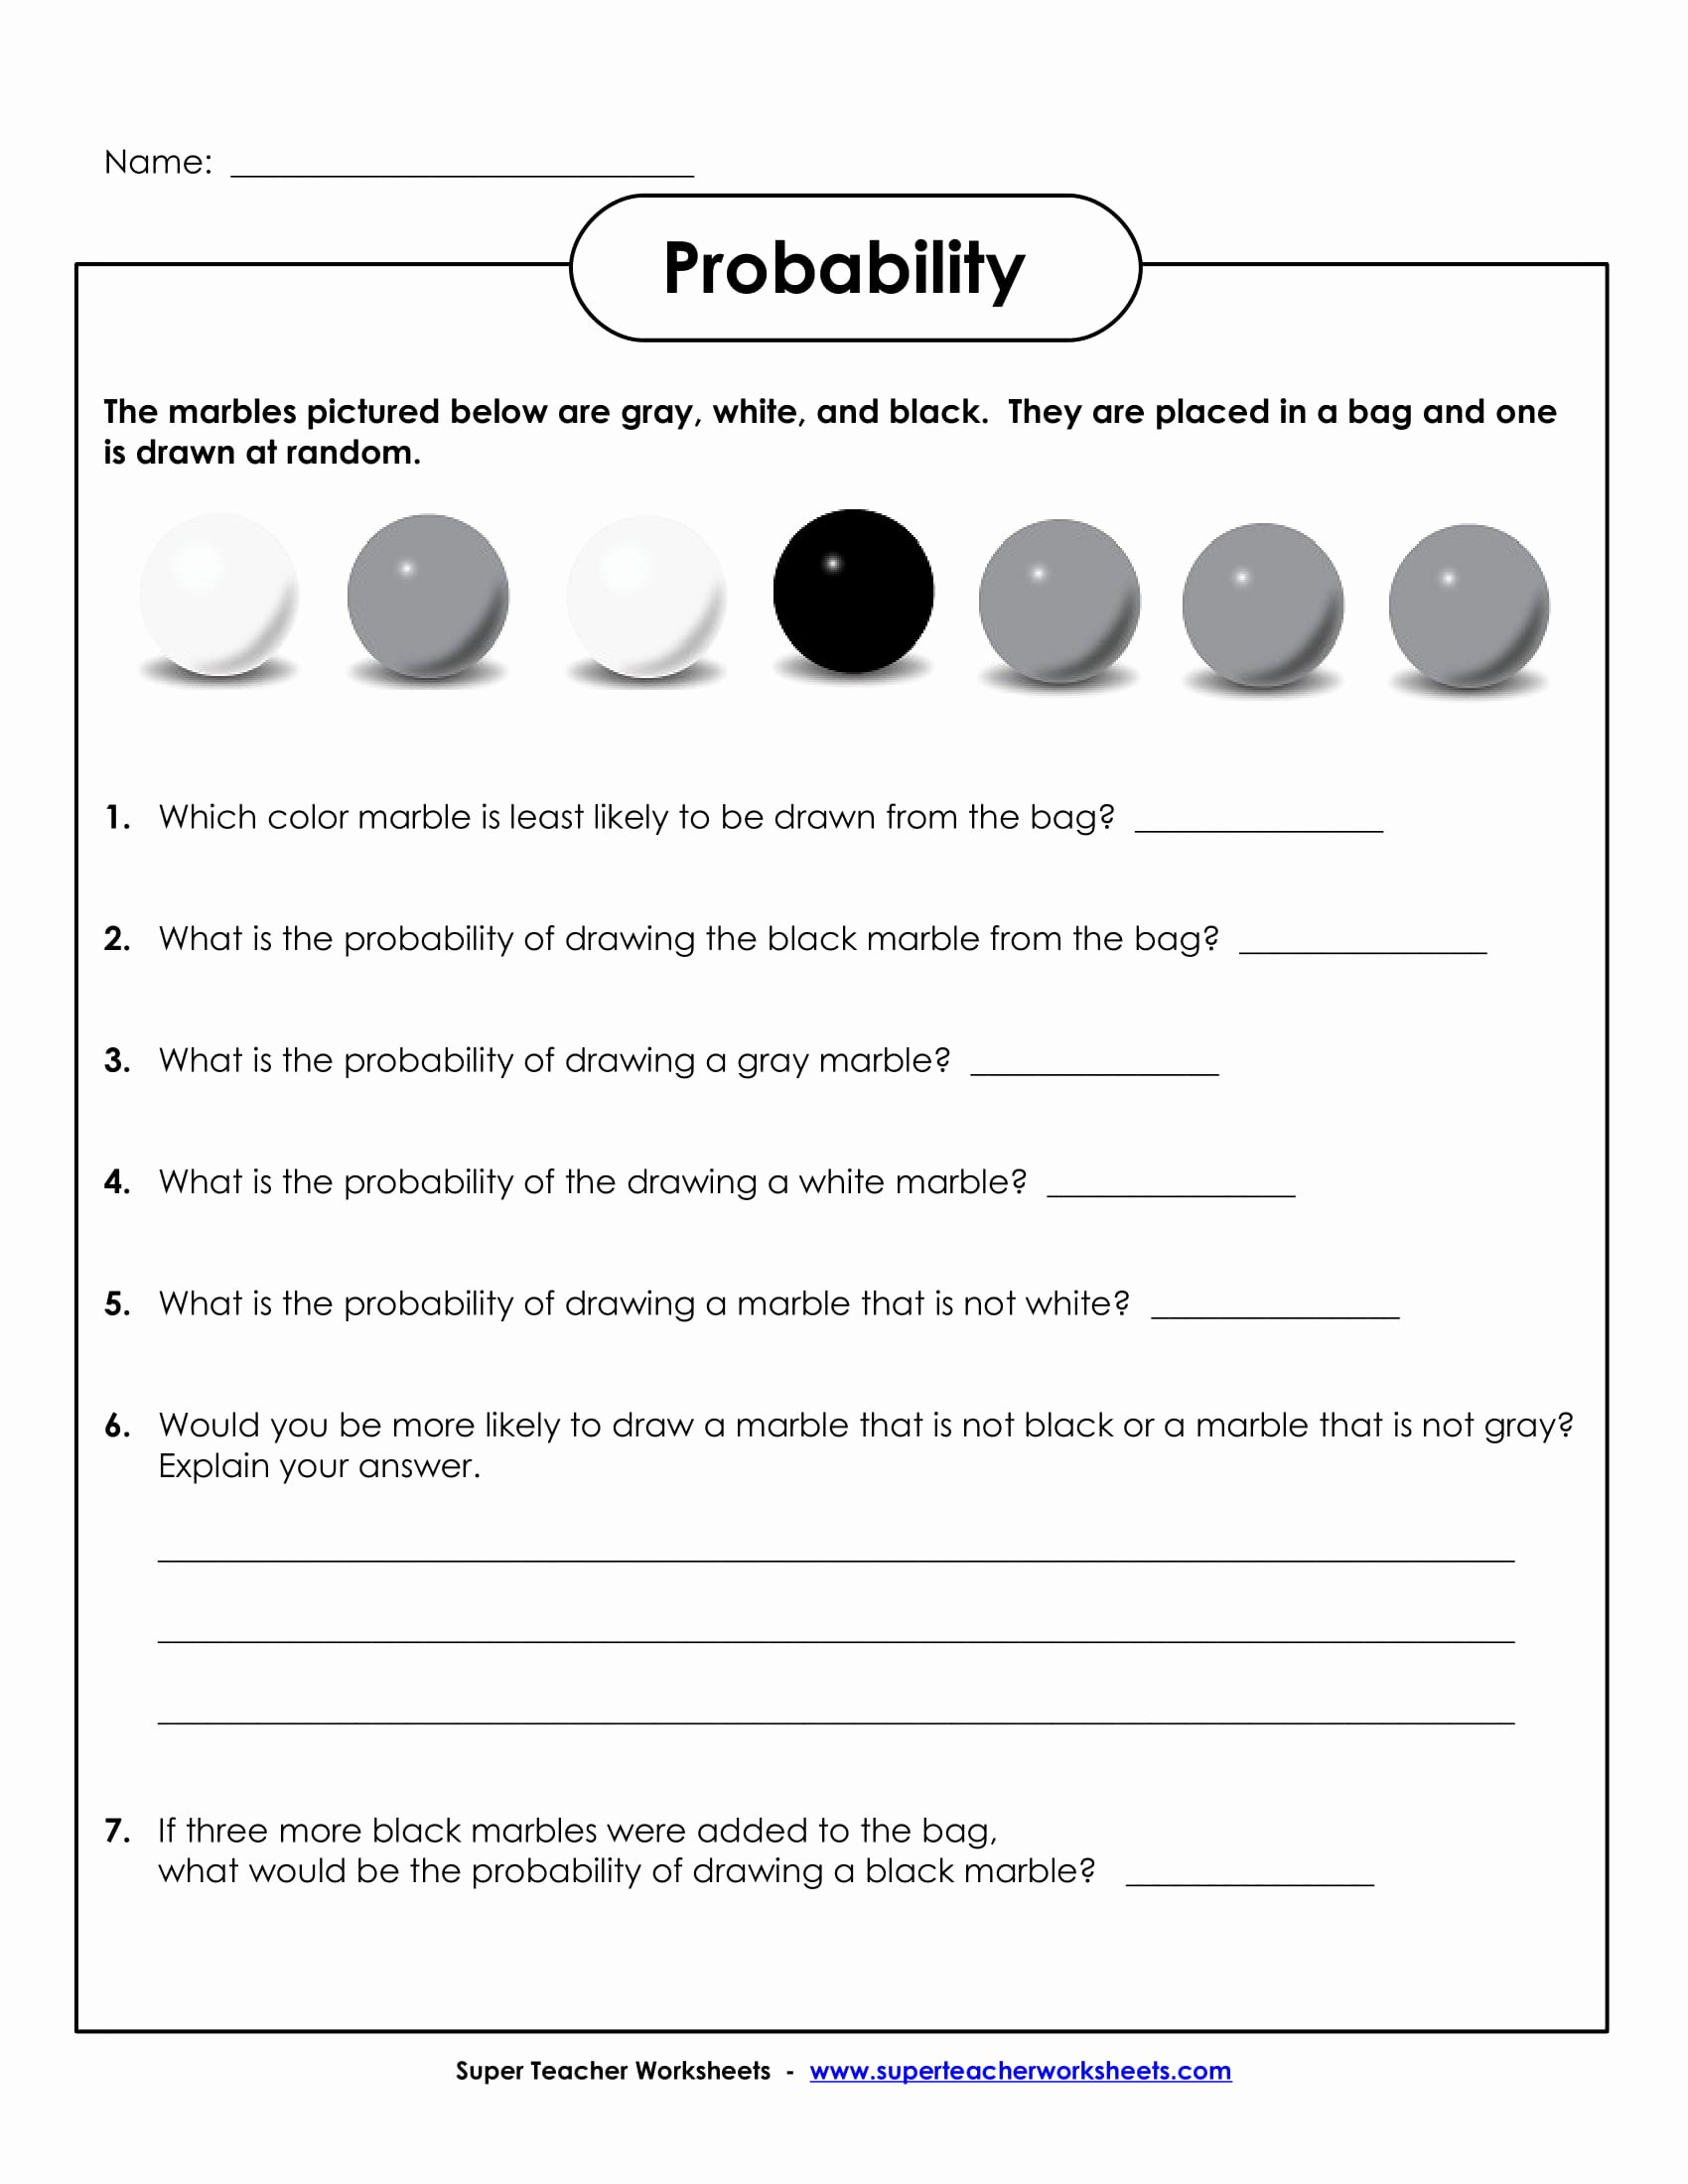 Simple Probability Worksheet Pdf Lovely 9 Math Worksheets for Students Pdf